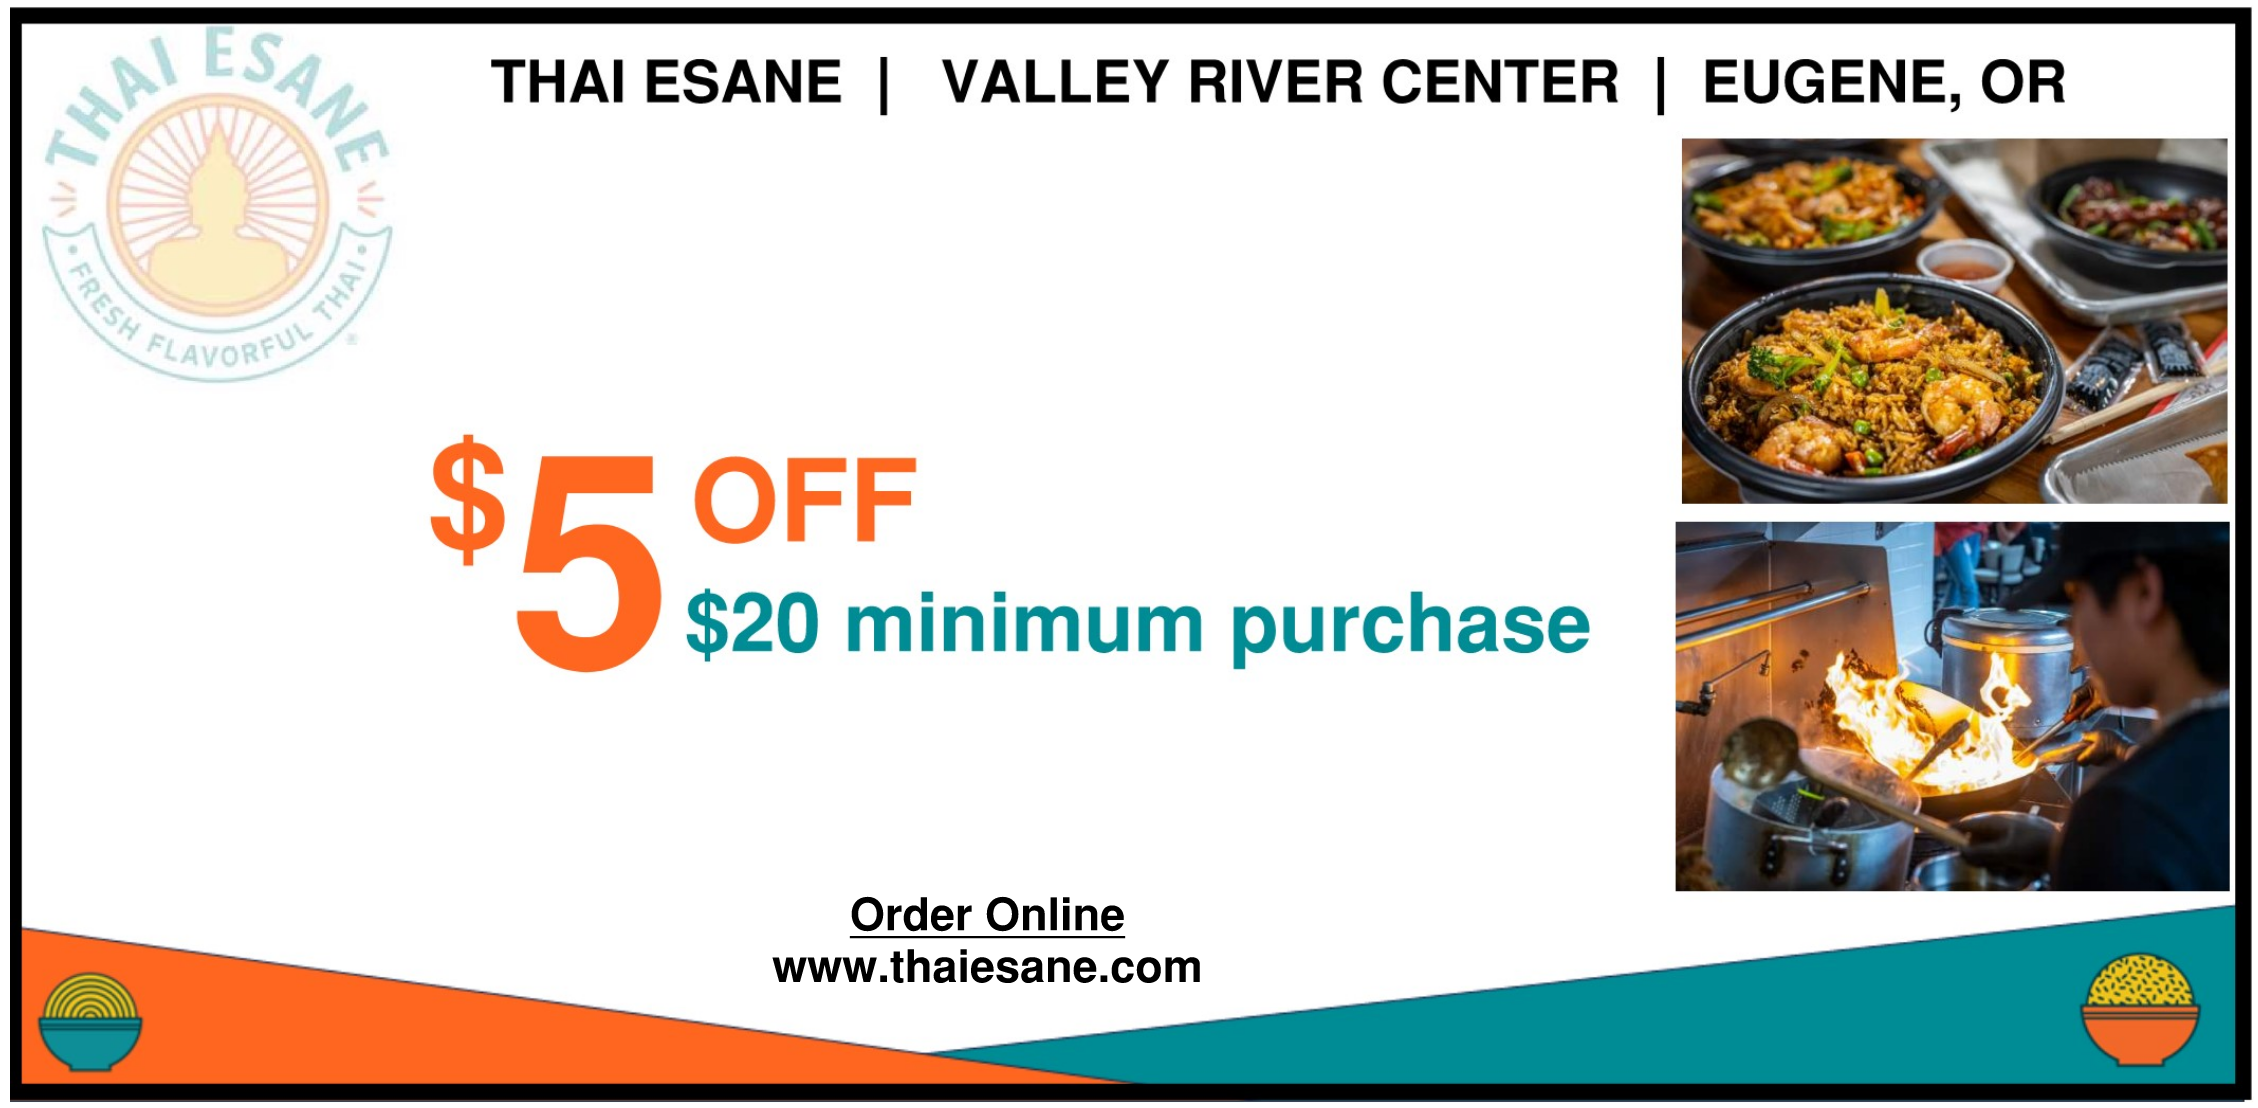 Thai Esane, Valley River Center, Eugene, OR. $5 off $20 minimum purchase. Order online www.thaiesane.com